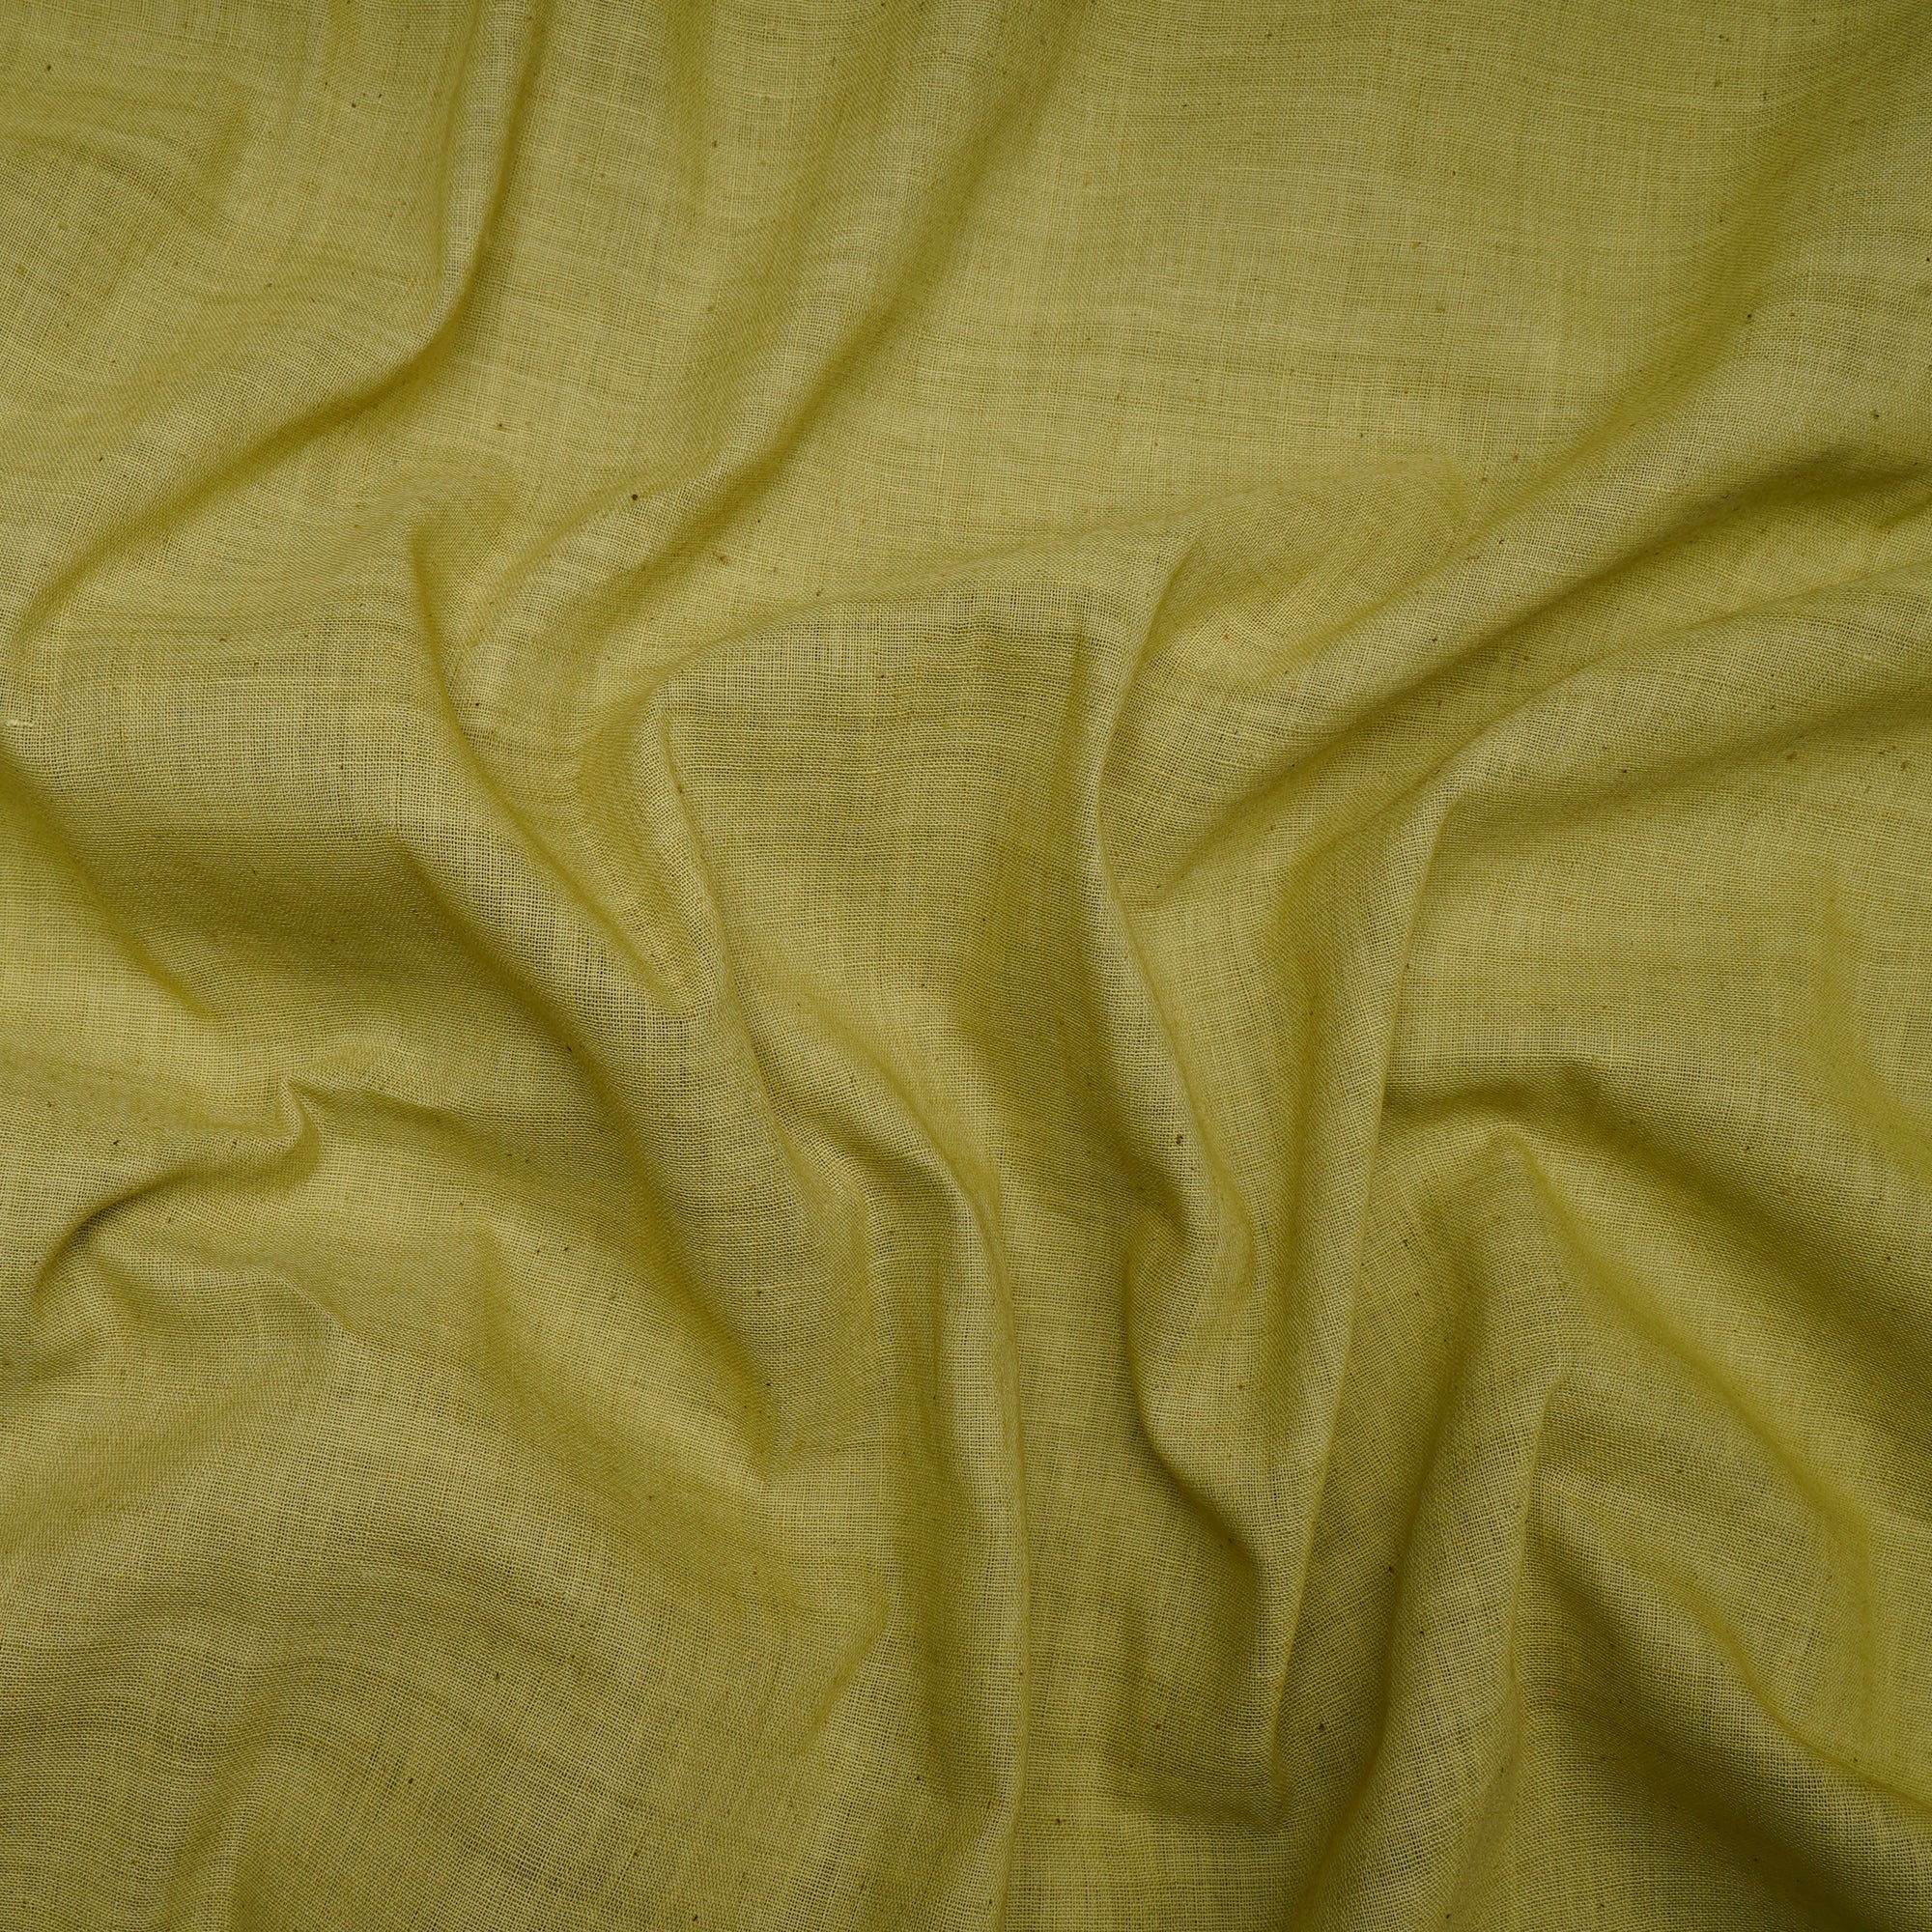 Daiquiri Green Handspun Handwoven Muslin Cotton Fabric